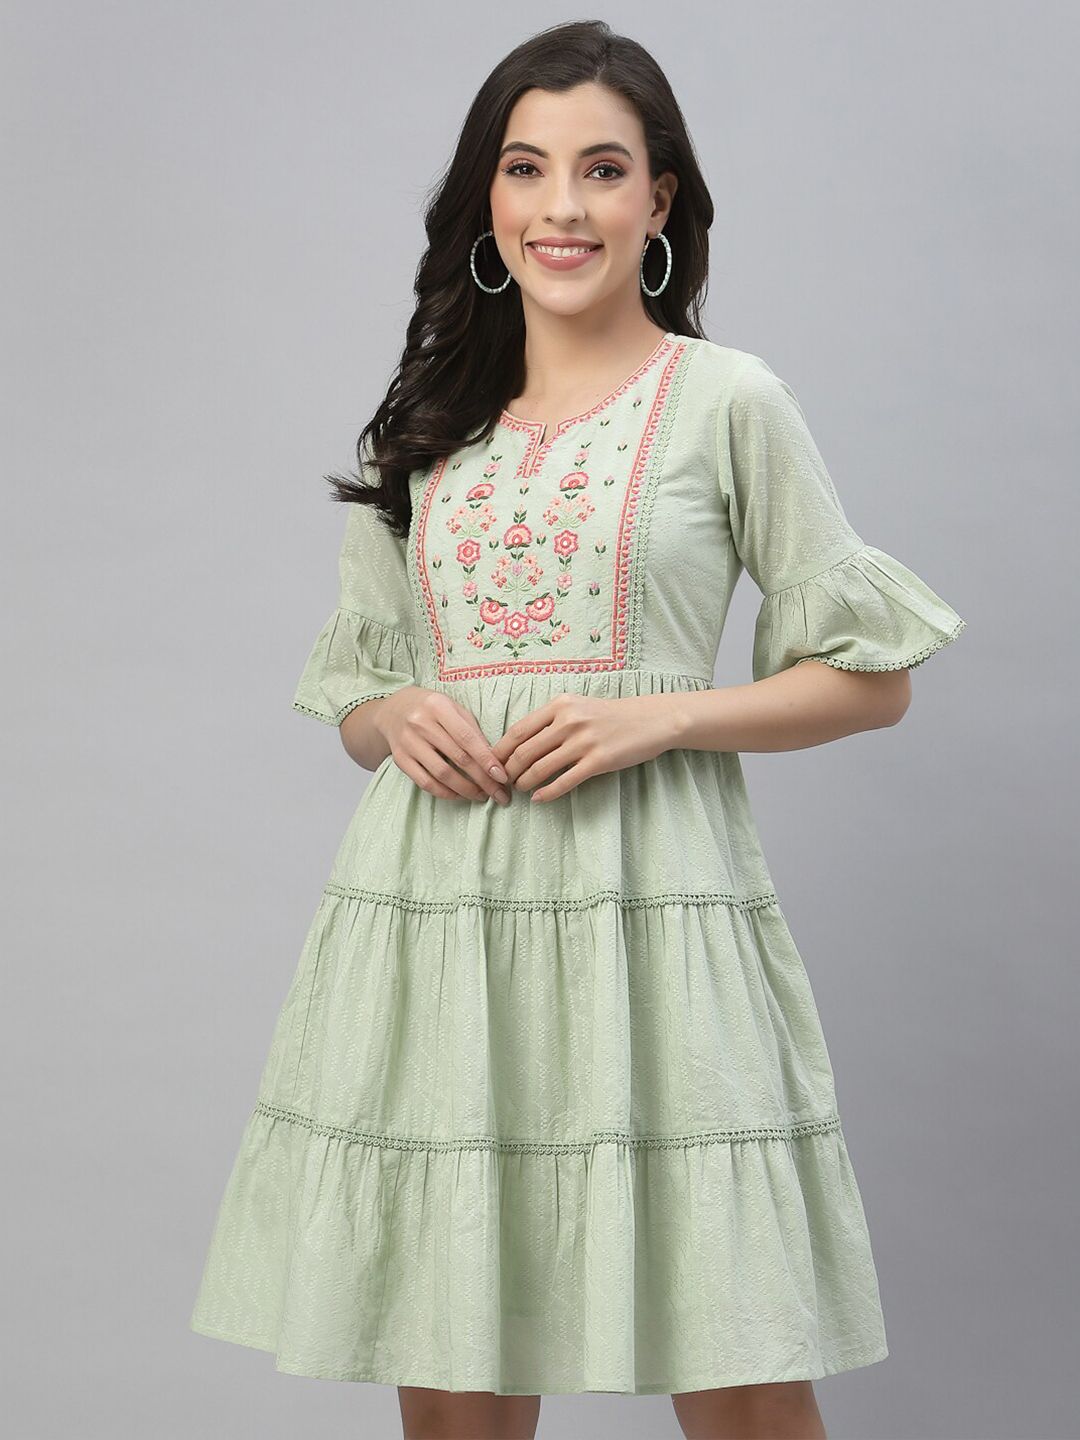 Juniper Green Ethnic Motifs Ethnic A-Line Dress Price in India